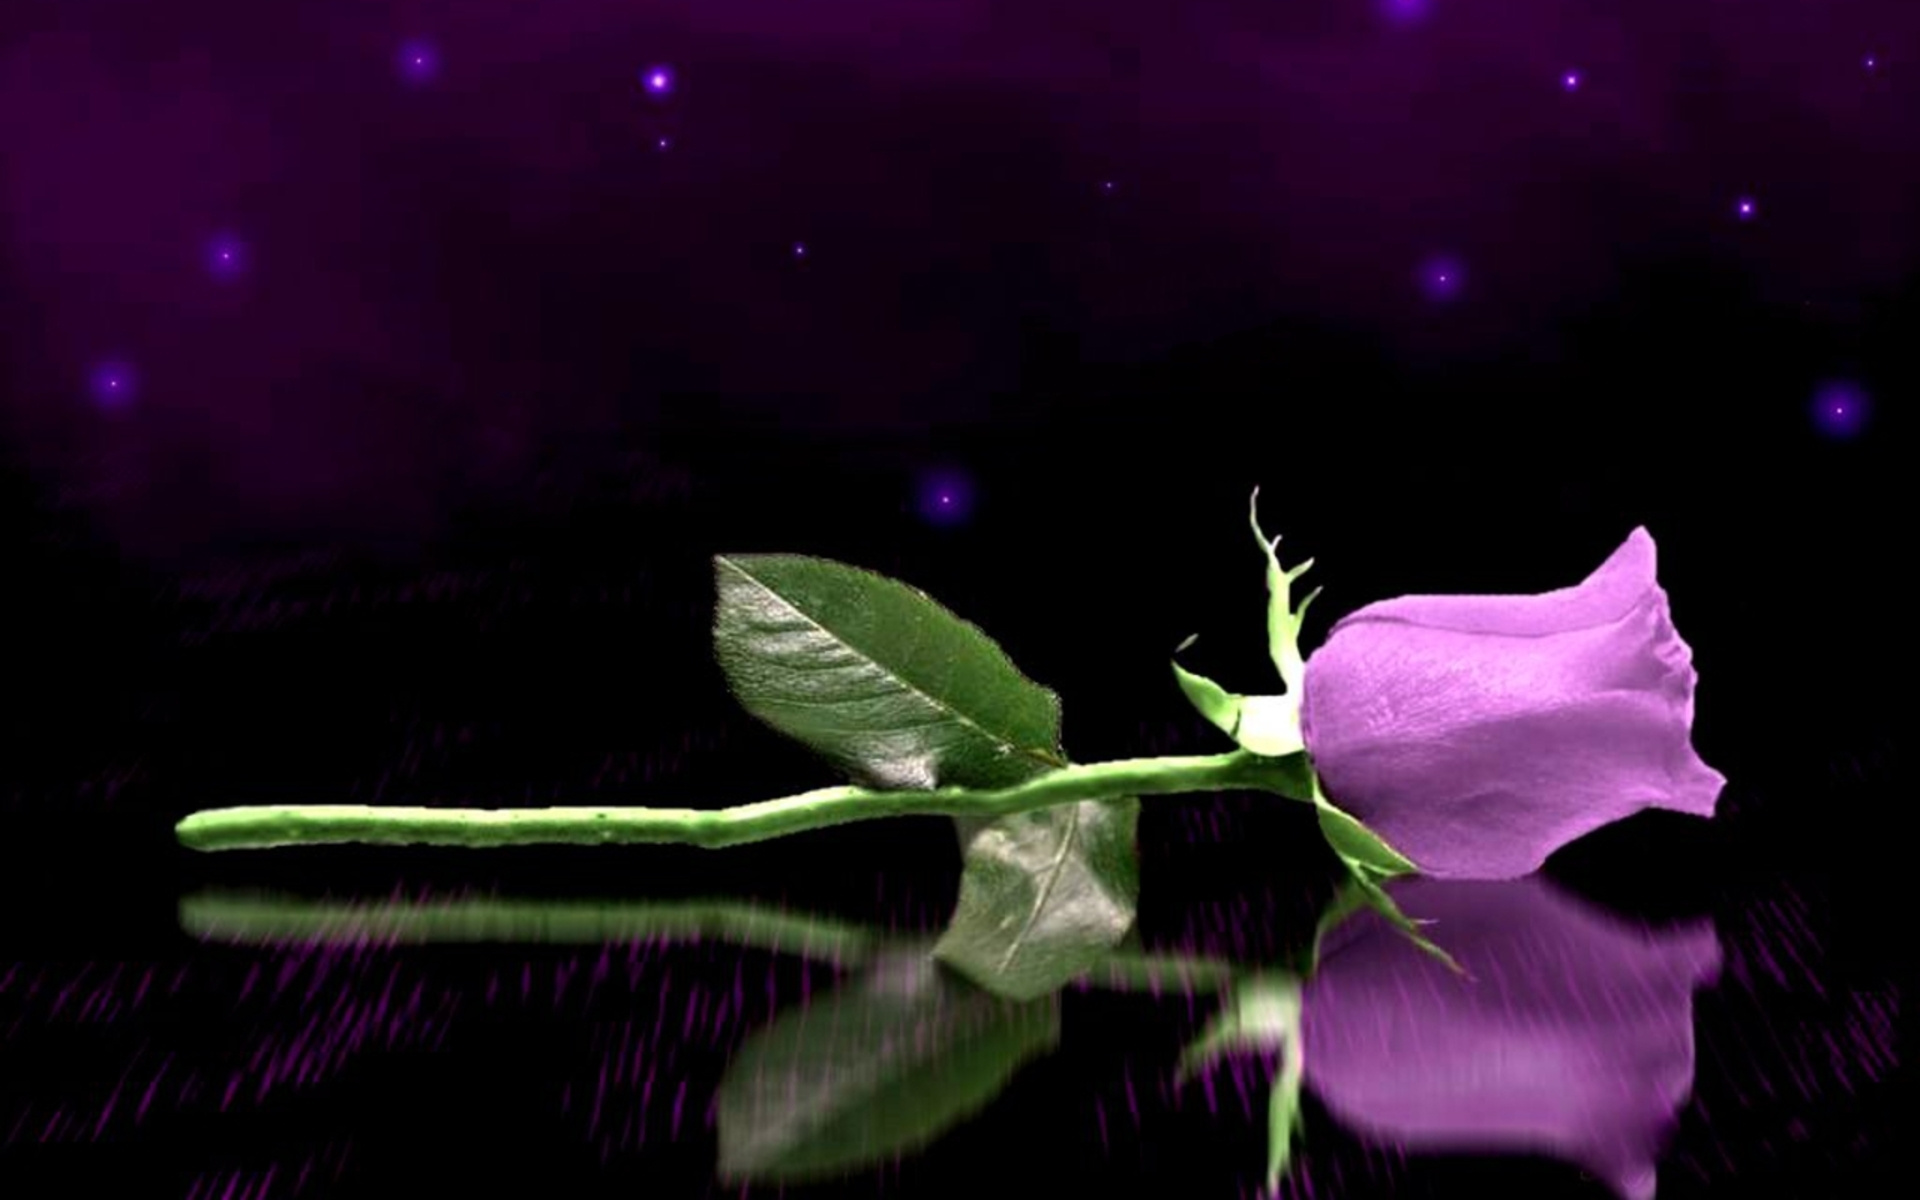 earth, rose, flower, purple flower, reflection, stem, flowers